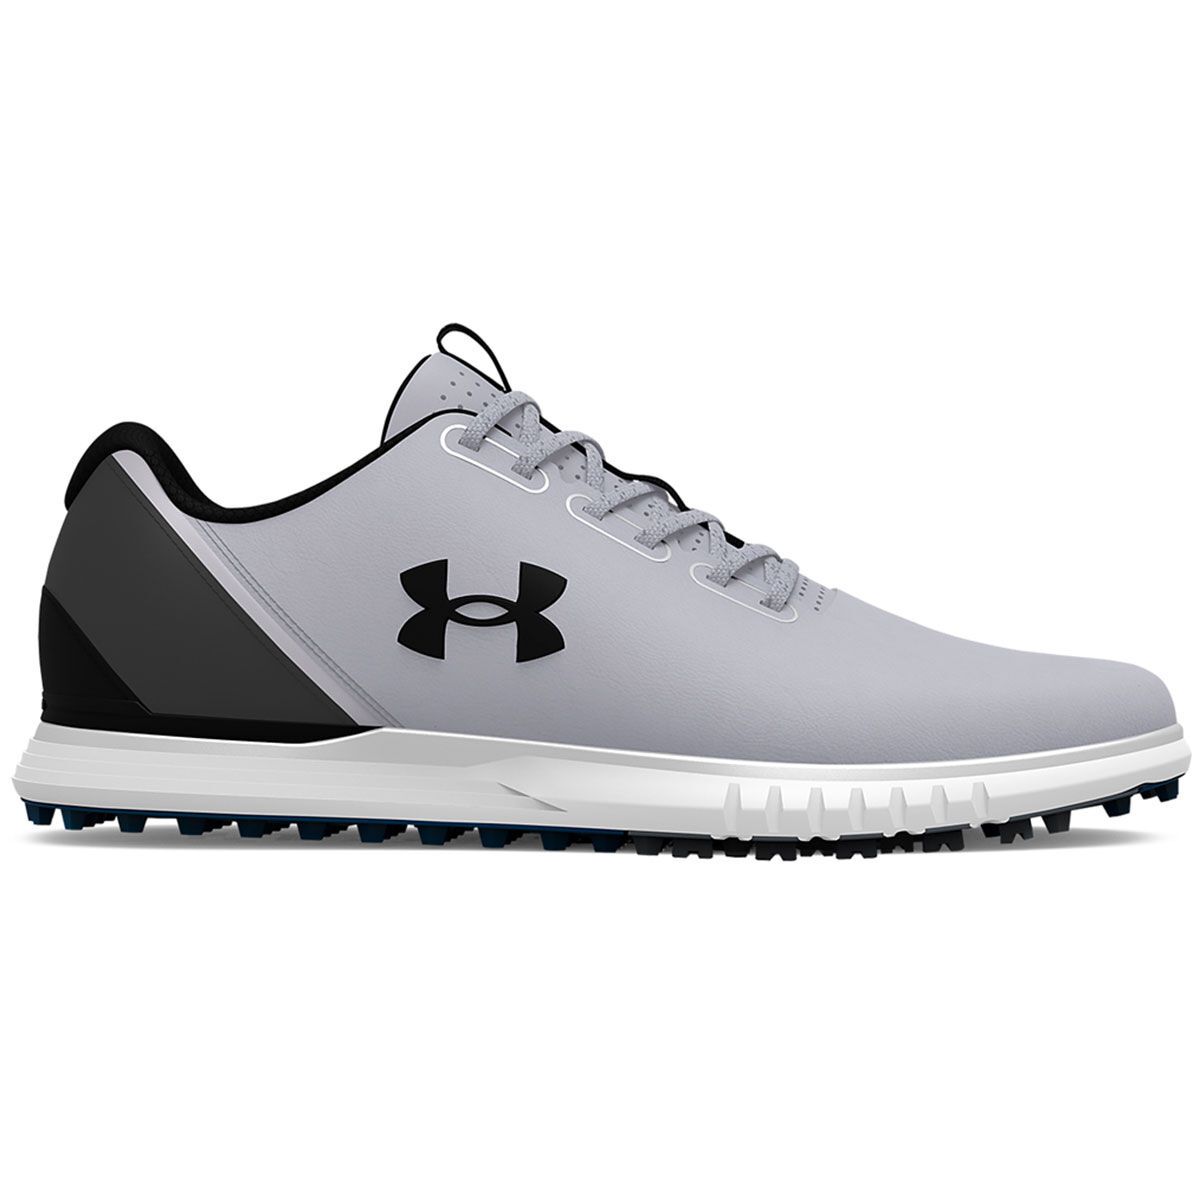 Under Armour Men’s Medal Waterproof Spikeless Golf Shoes, Mens, Mod gray/jet gray/black, 7 | American Golf